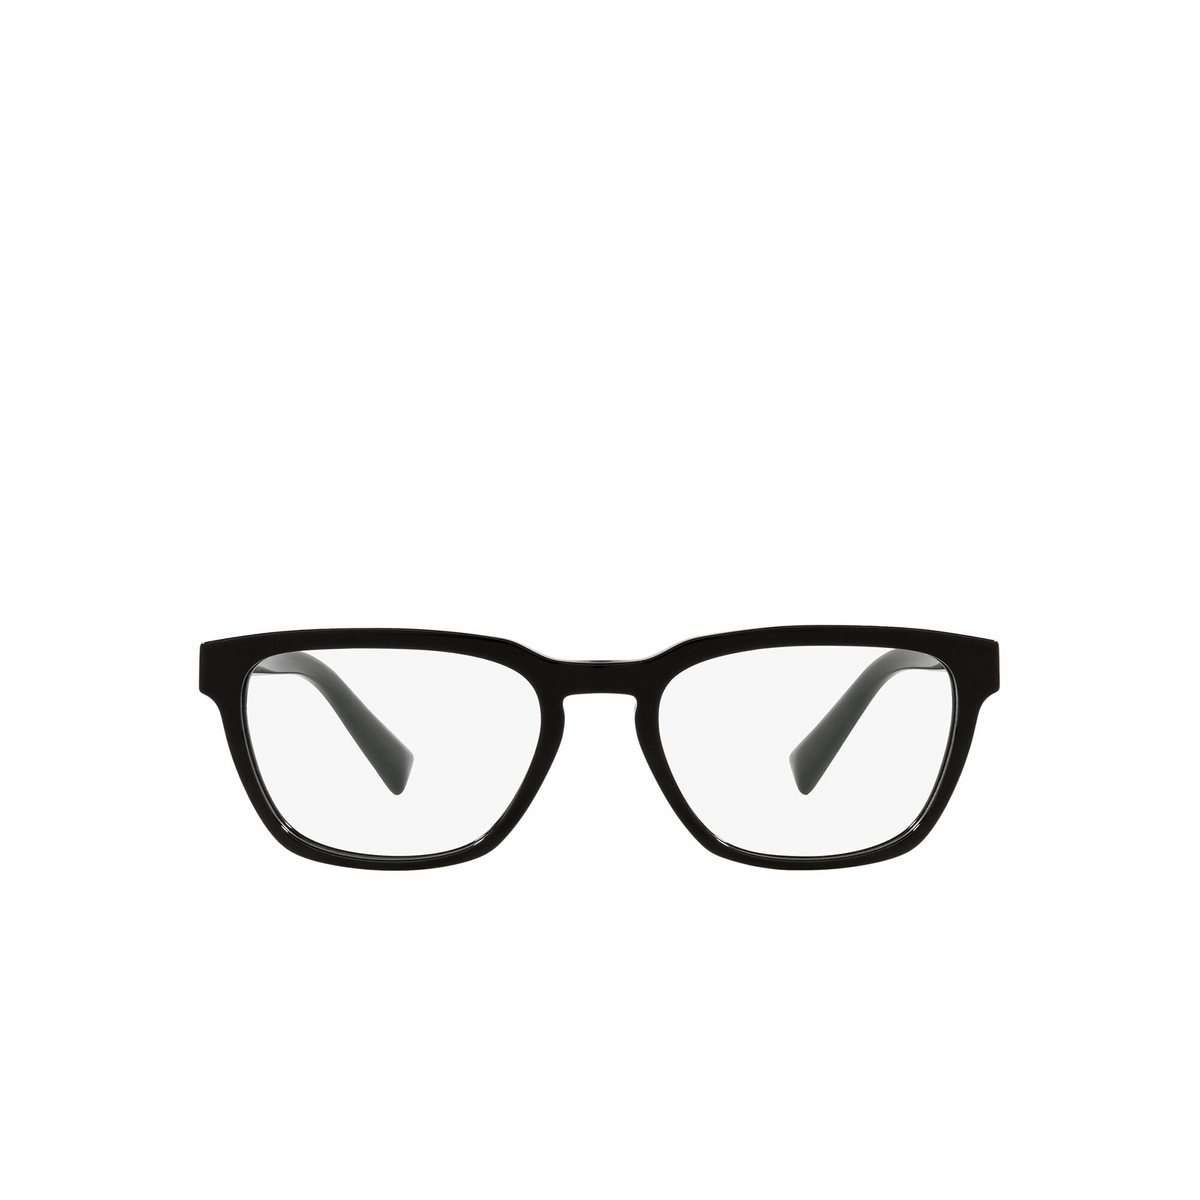 Dolce & Gabbana® Square Eyeglasses: DG3333 color Black 501 - front view.